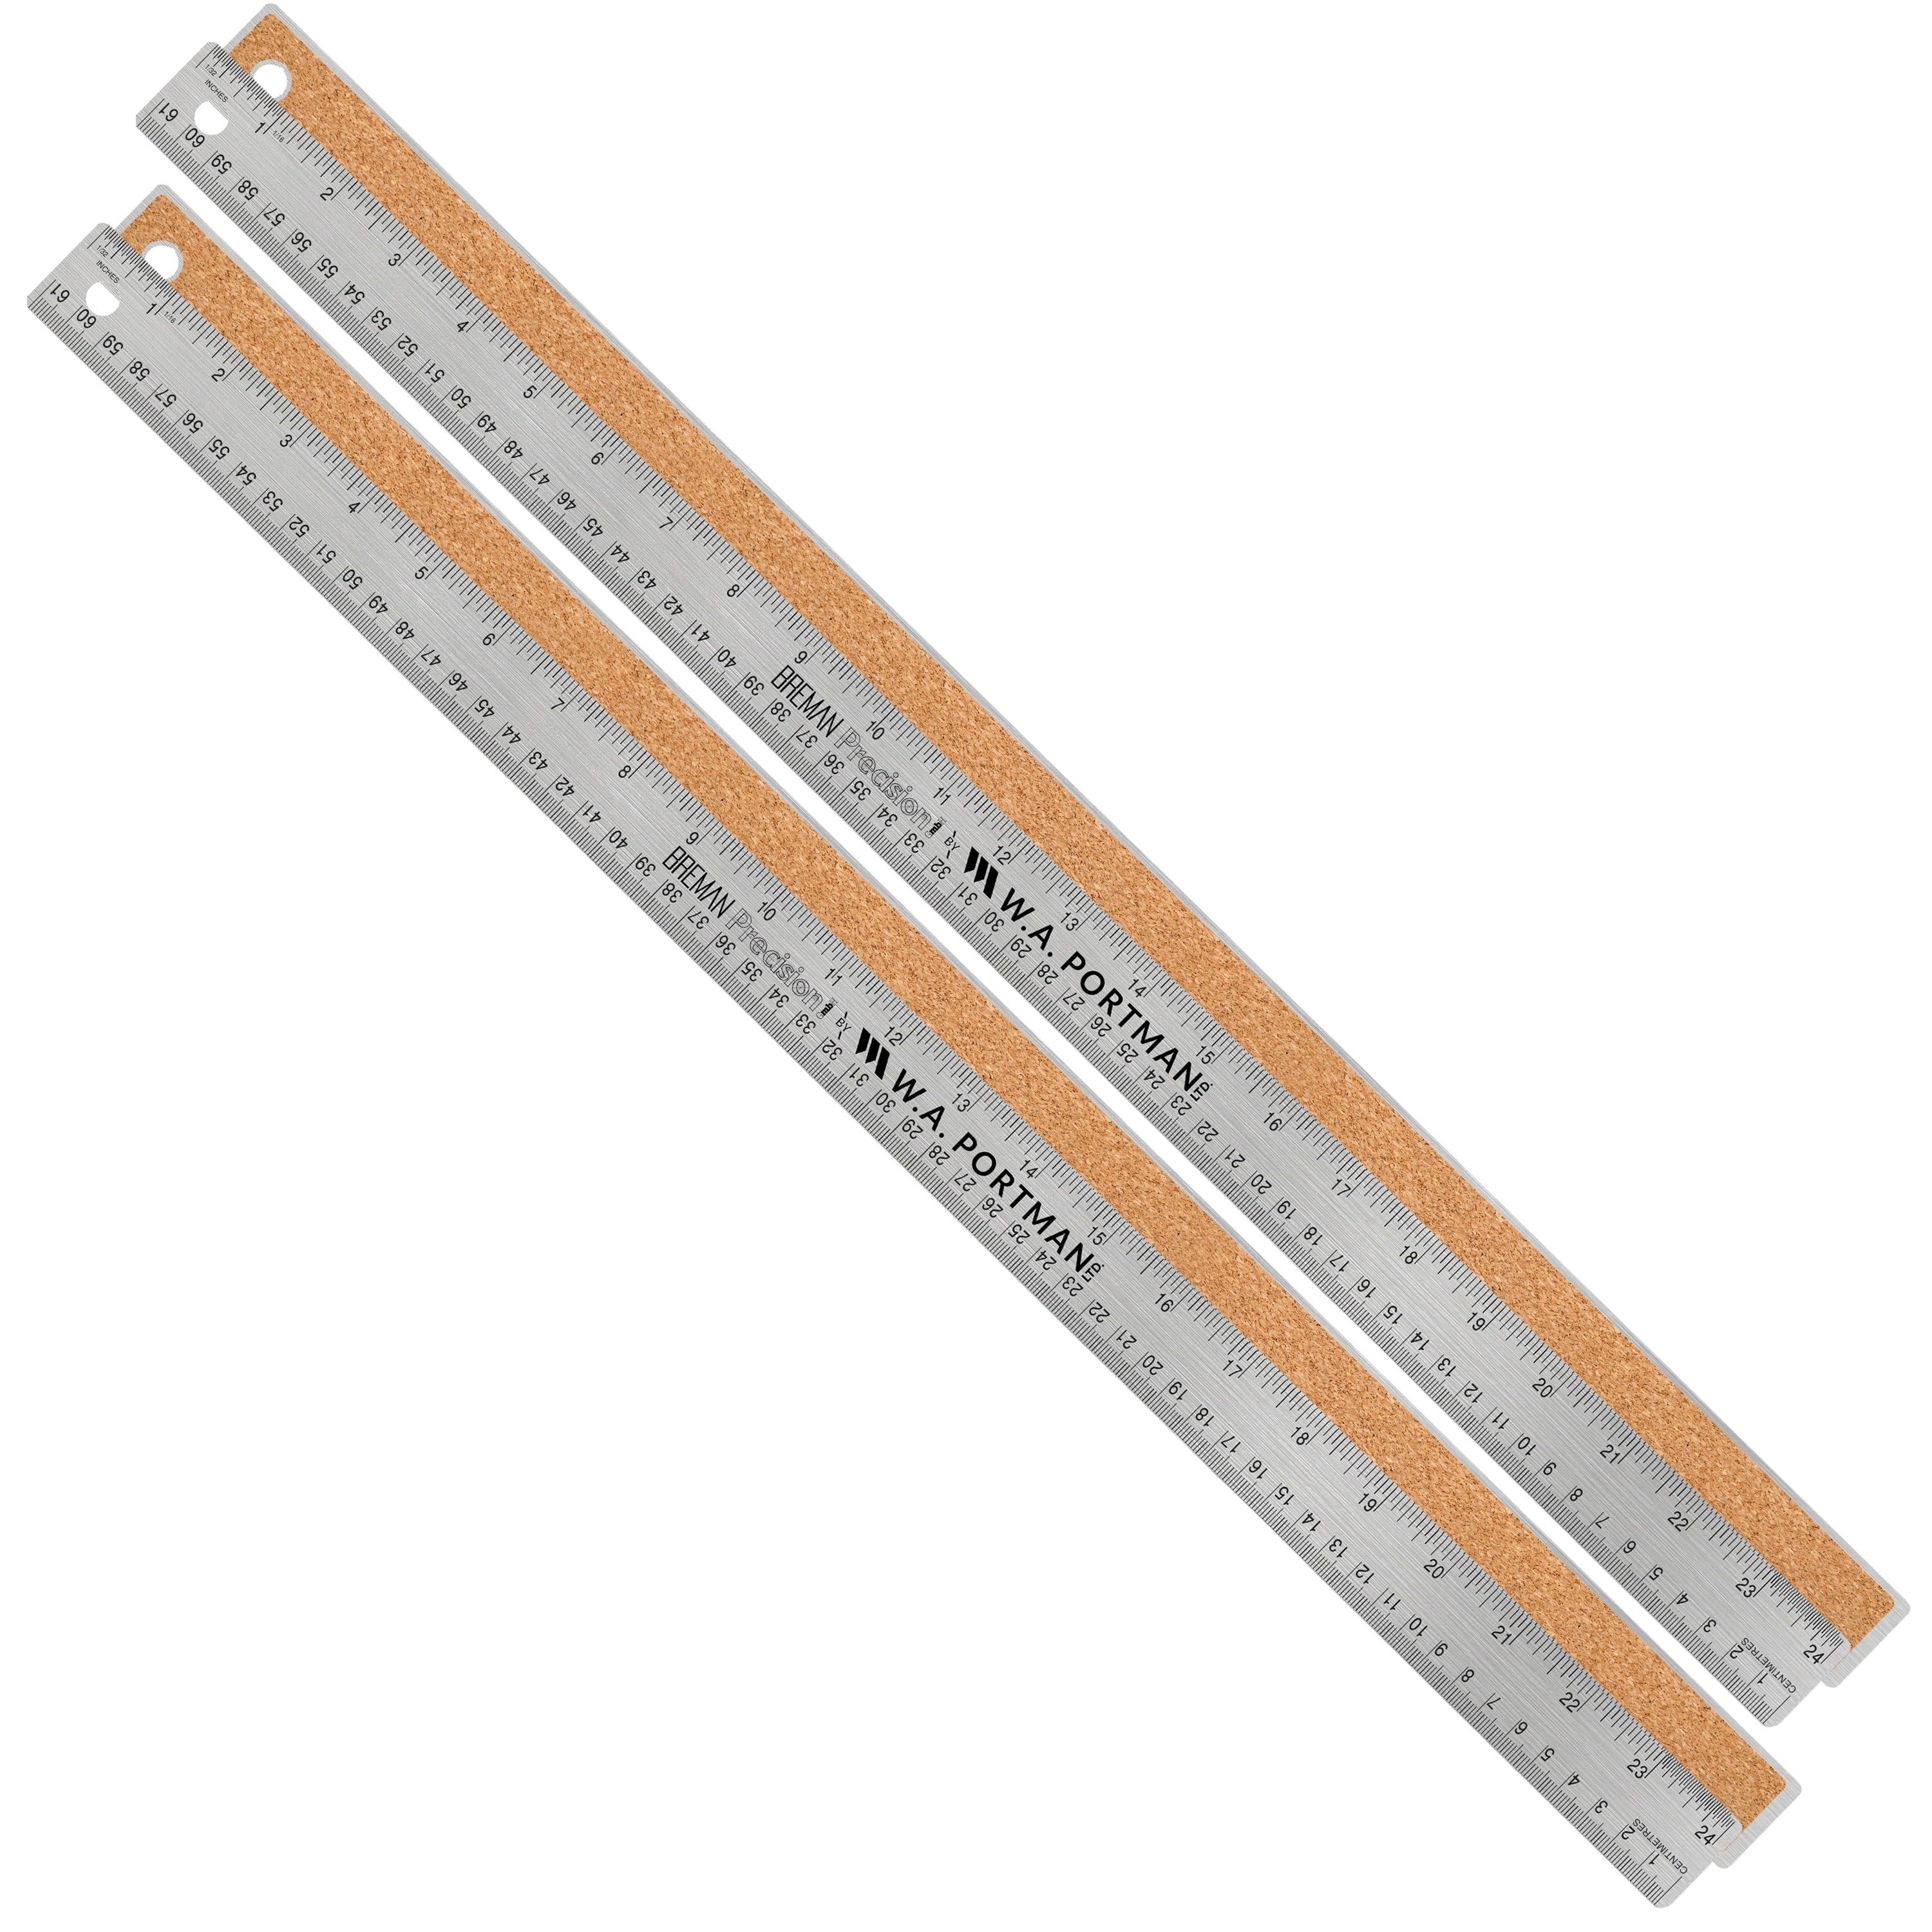 Breman Precision Stainless Steel Ruler, 24-inch Cork Back Ruler 2-Pack